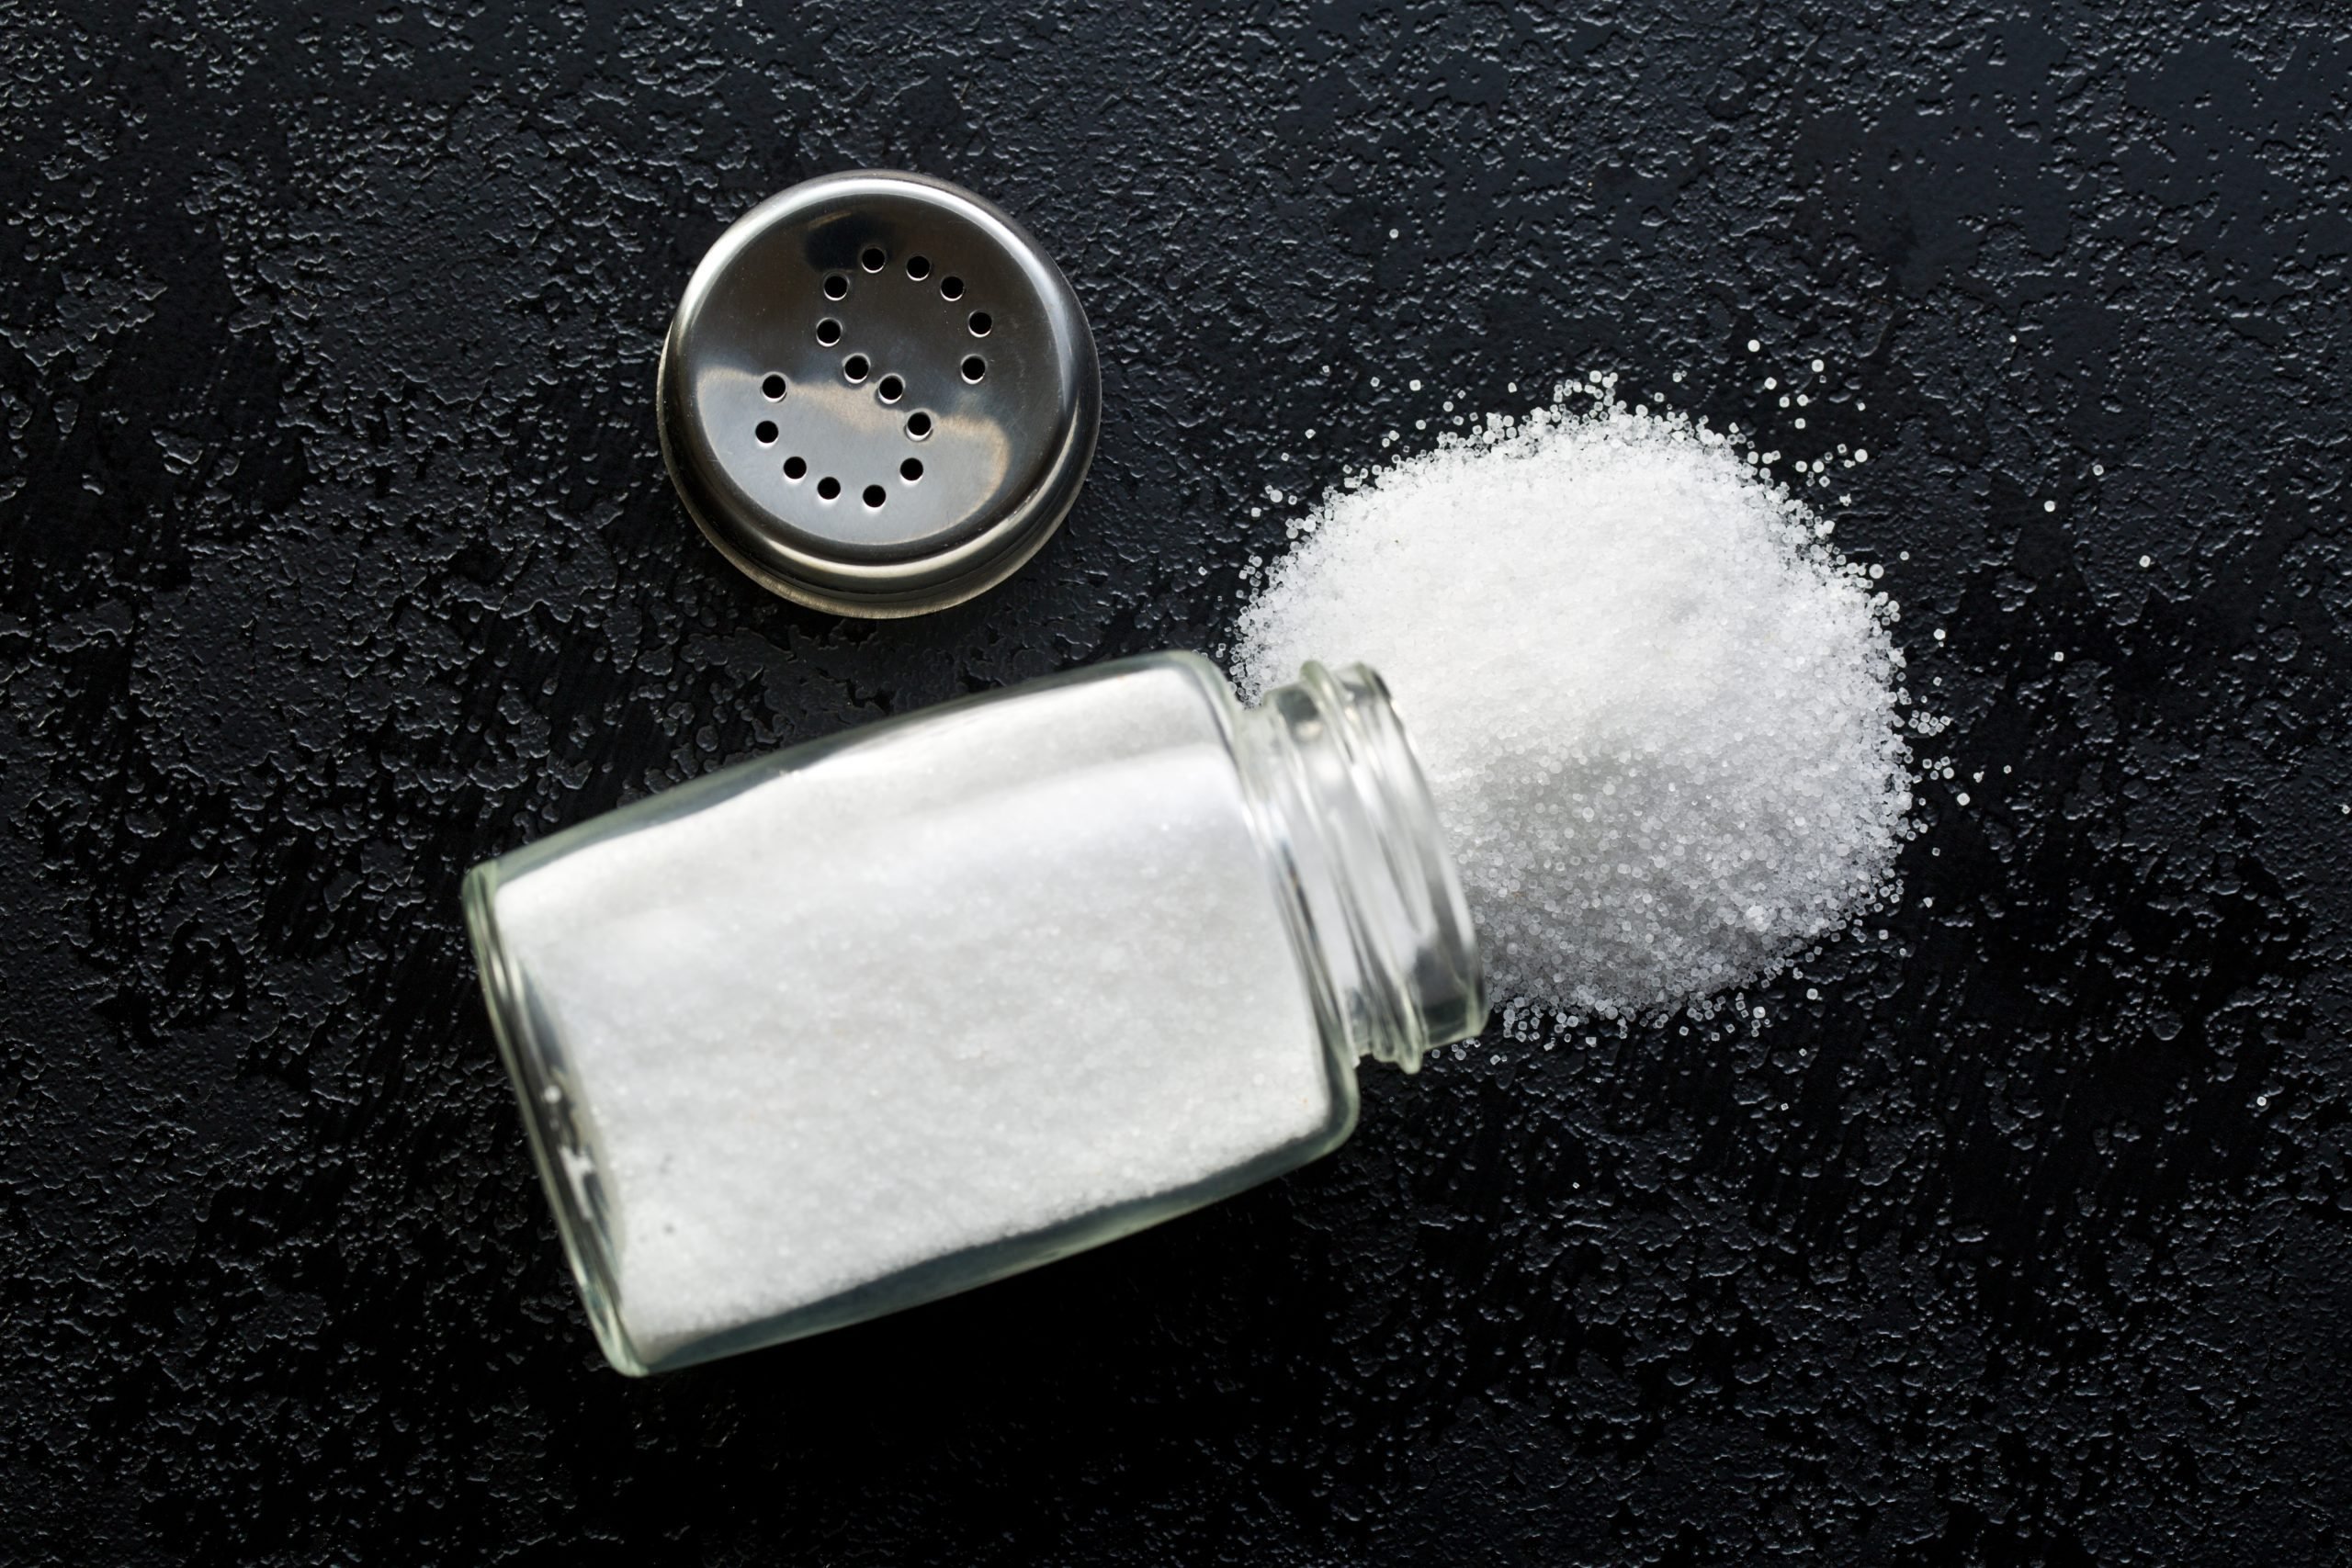 60 Uses for Salt That Don't Involve Cooking | Reader's Digest